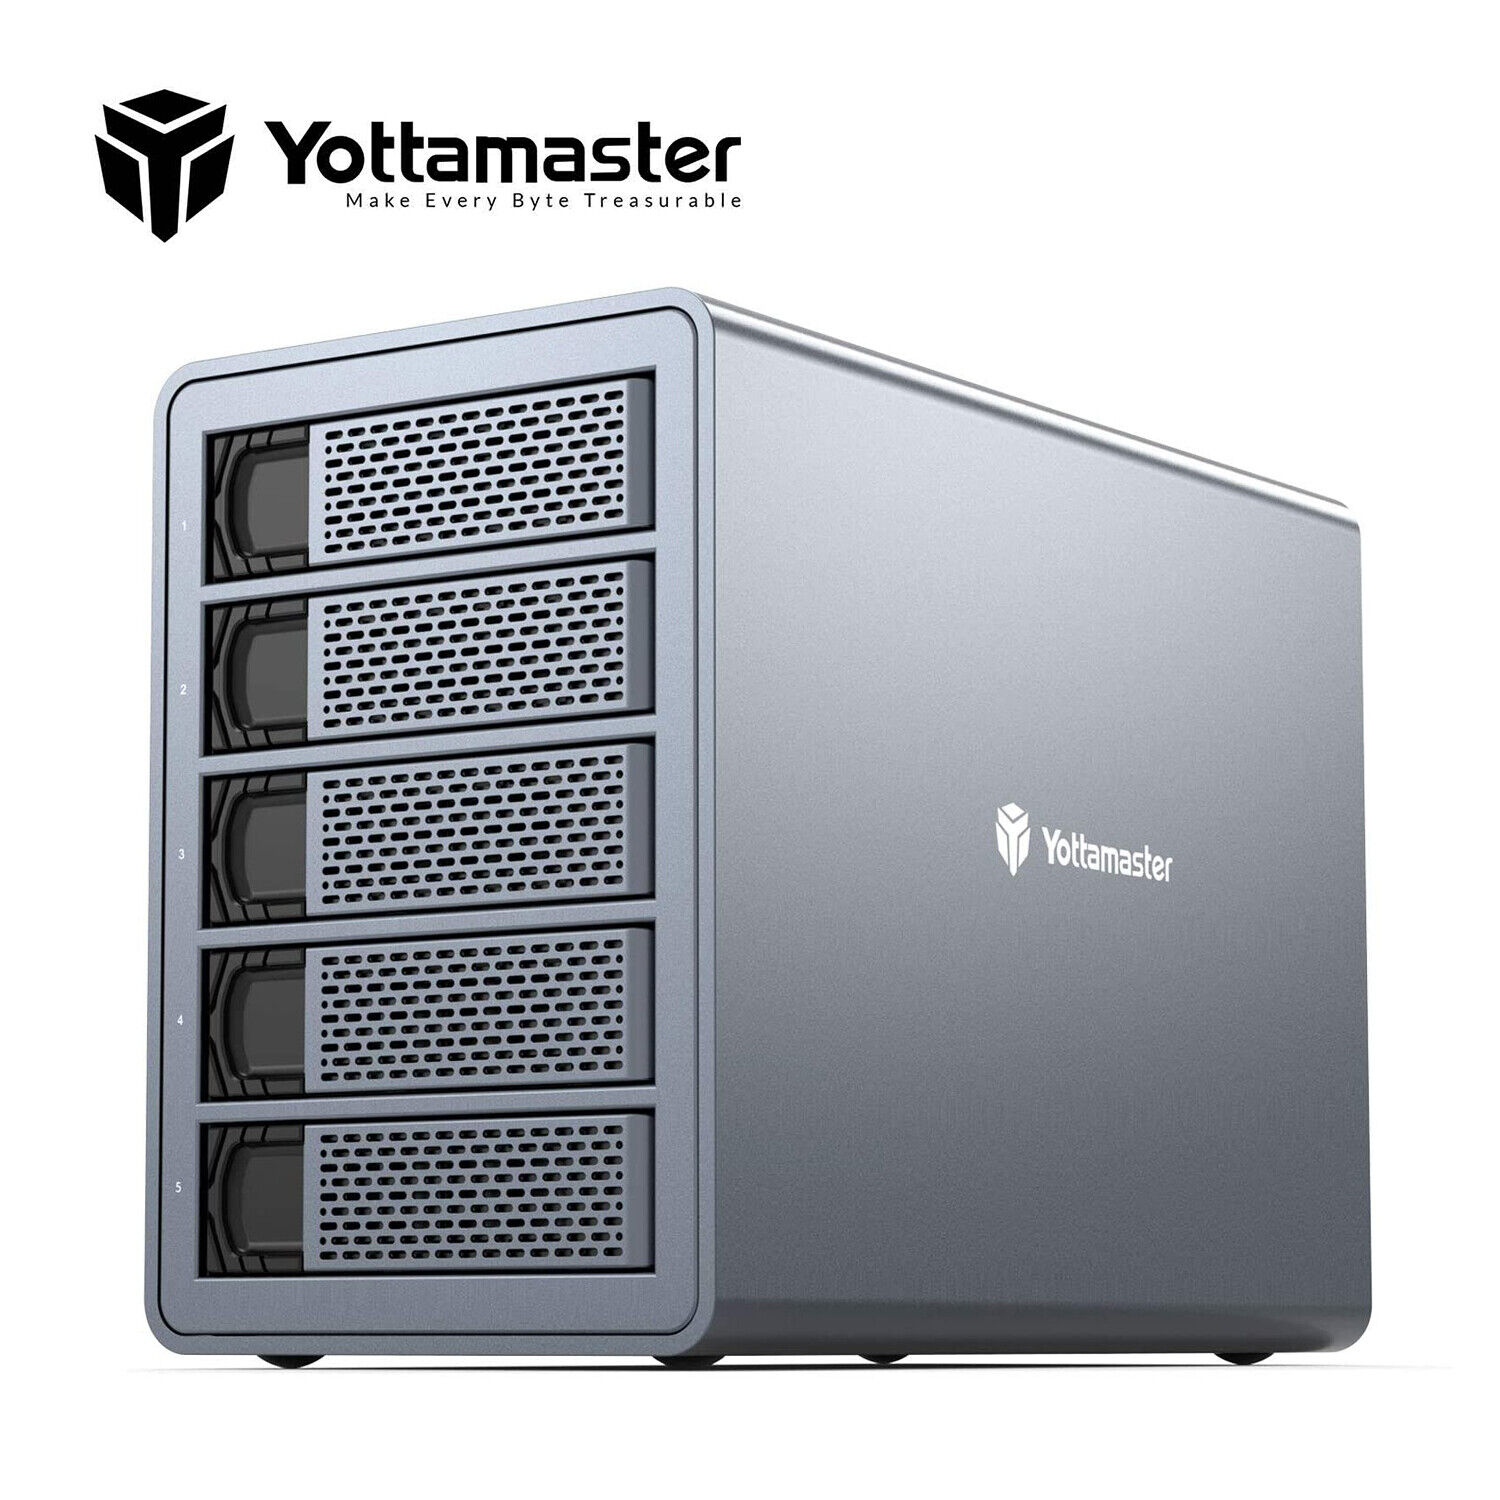 Yottamaster 5 Bay USB C Hard Drive Enclosure Daisy Chain Fits 2.5